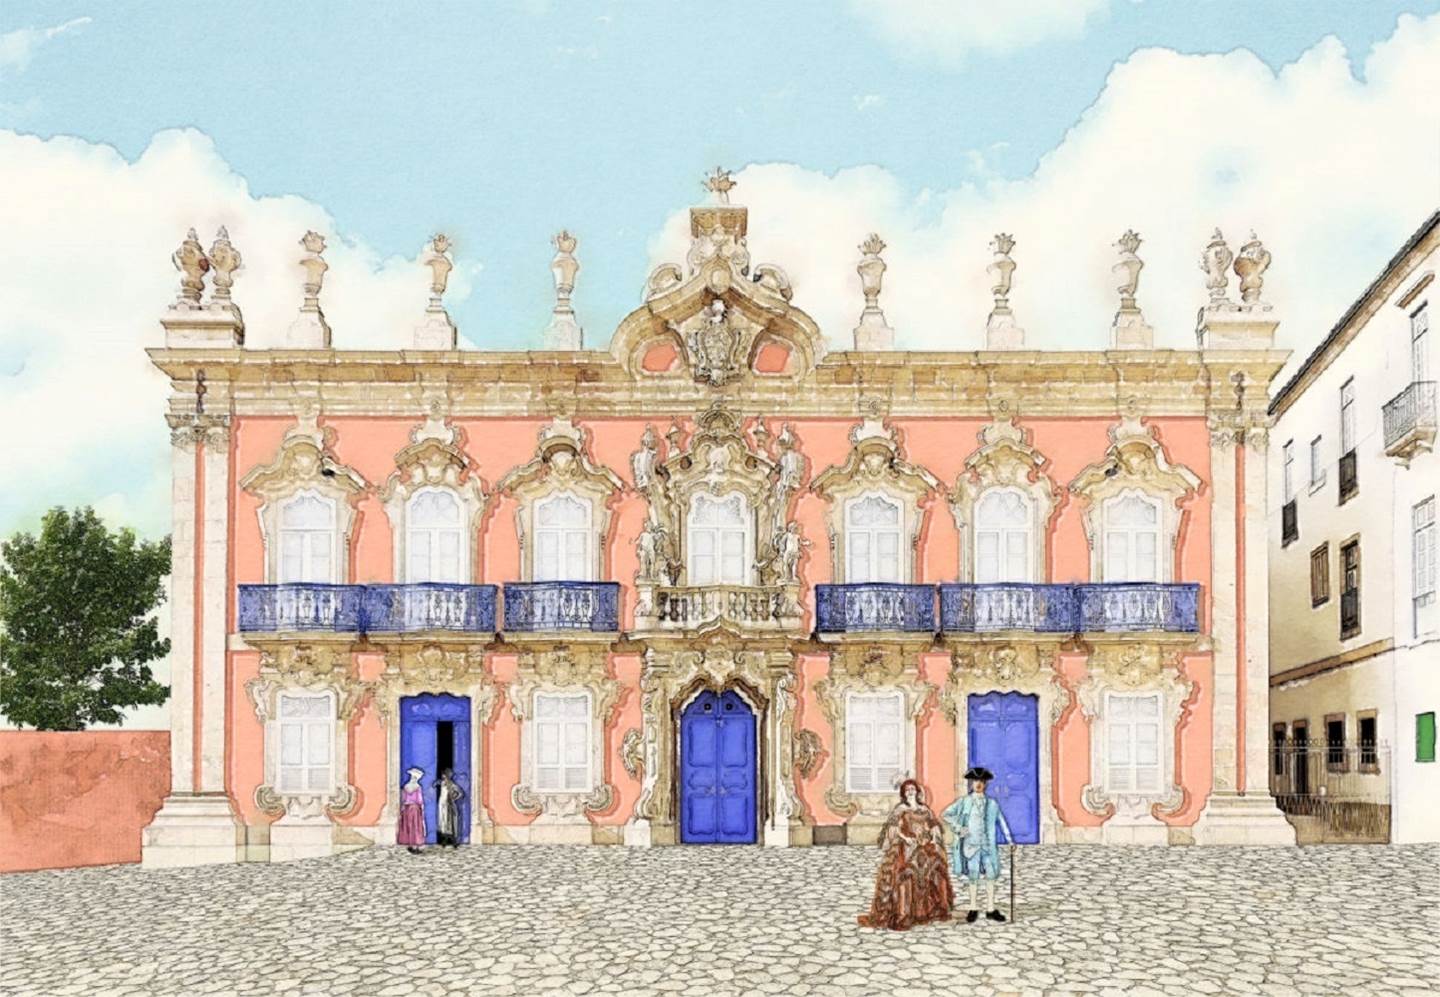 Palácio do Raio, original Architecture Mixed Technique Drawing and Illustration by César  Figueiredo